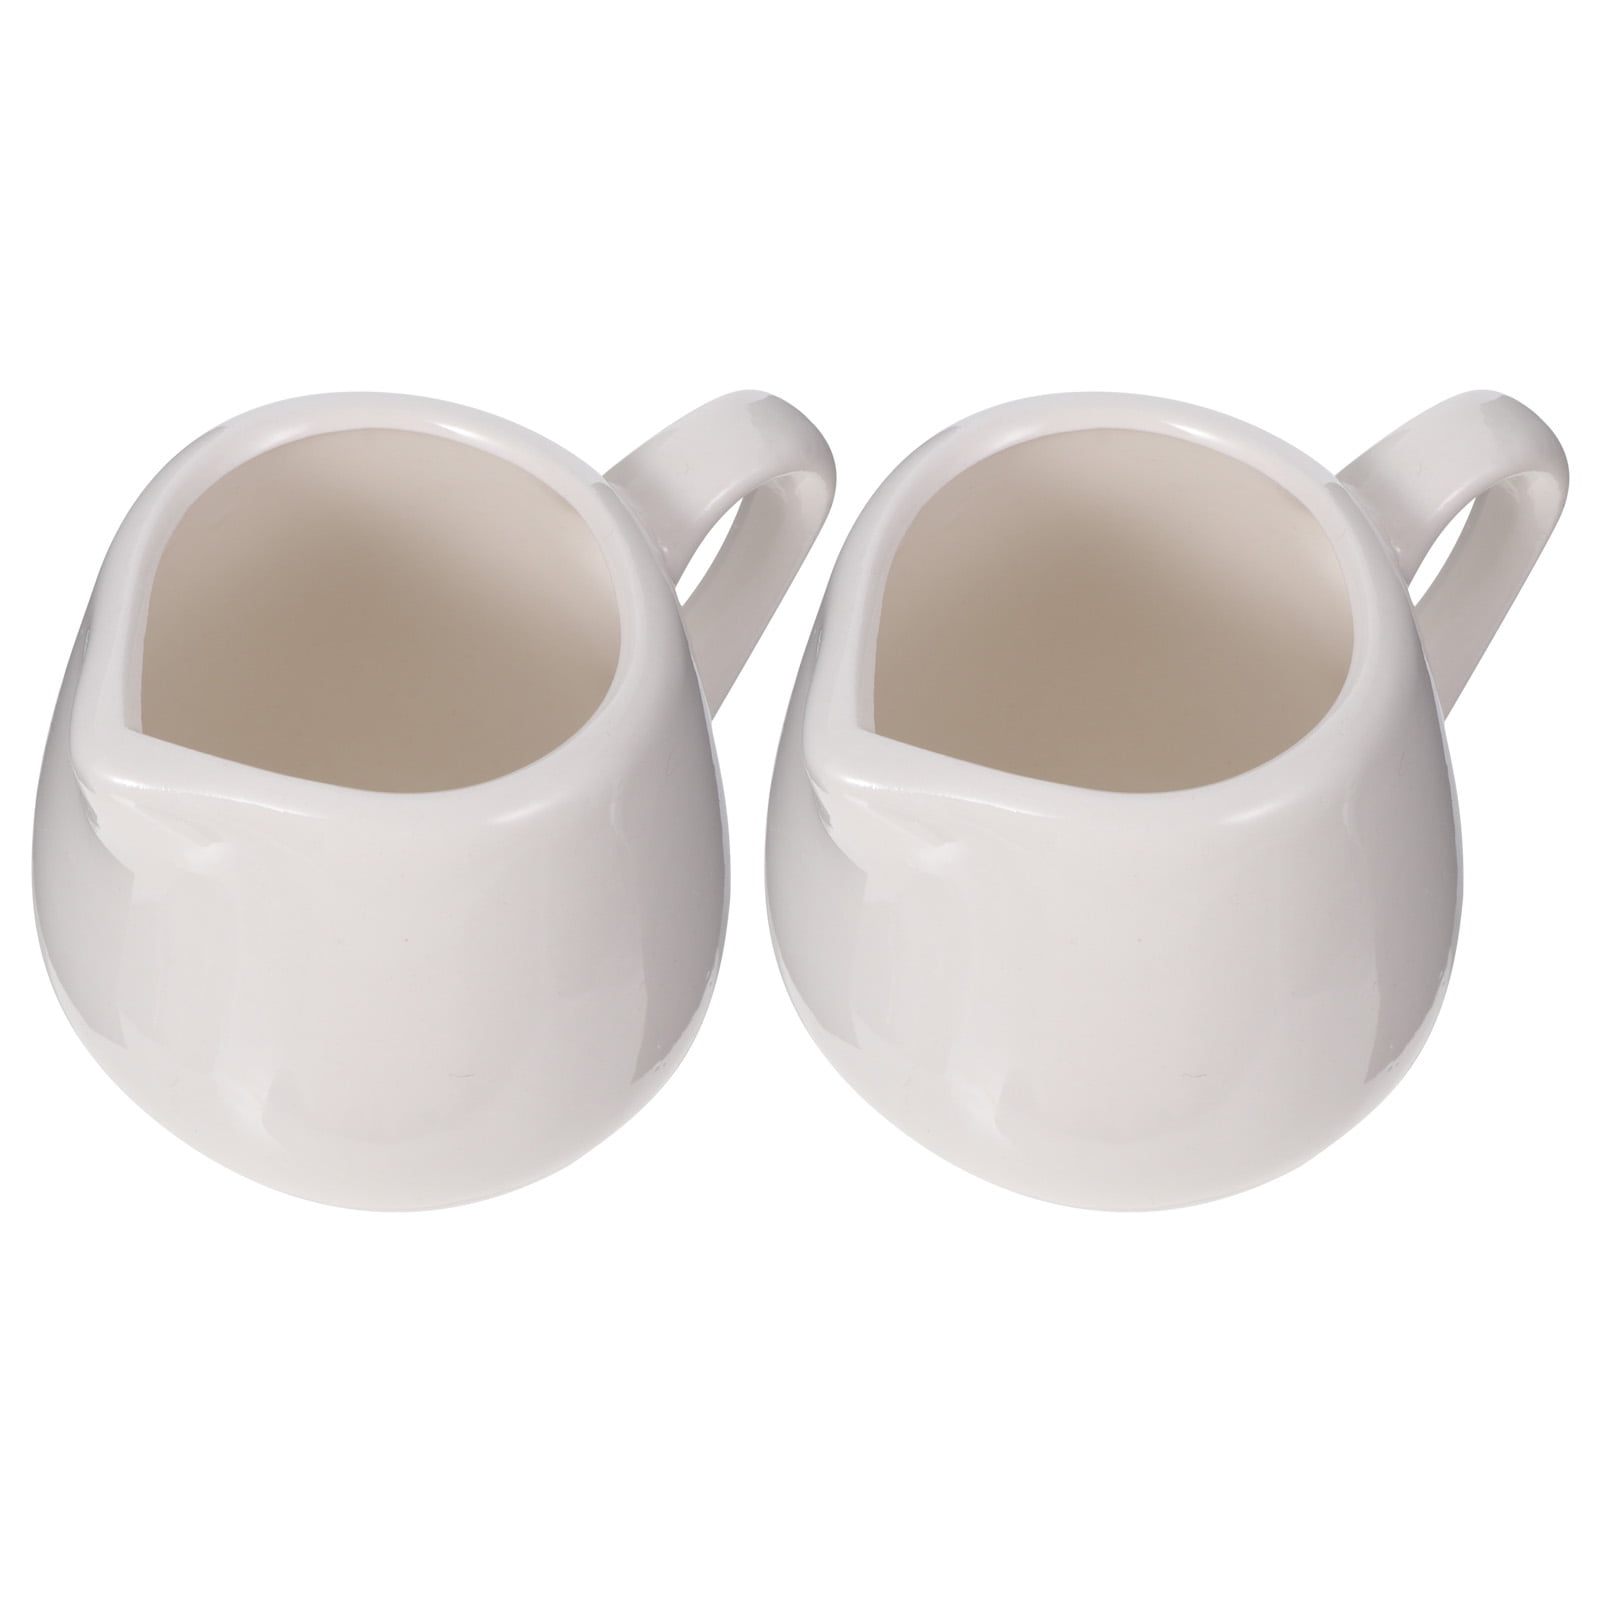 YWDL Mini Ceramic Milk Jug With Handle Espresso Coffee Cream Jugs